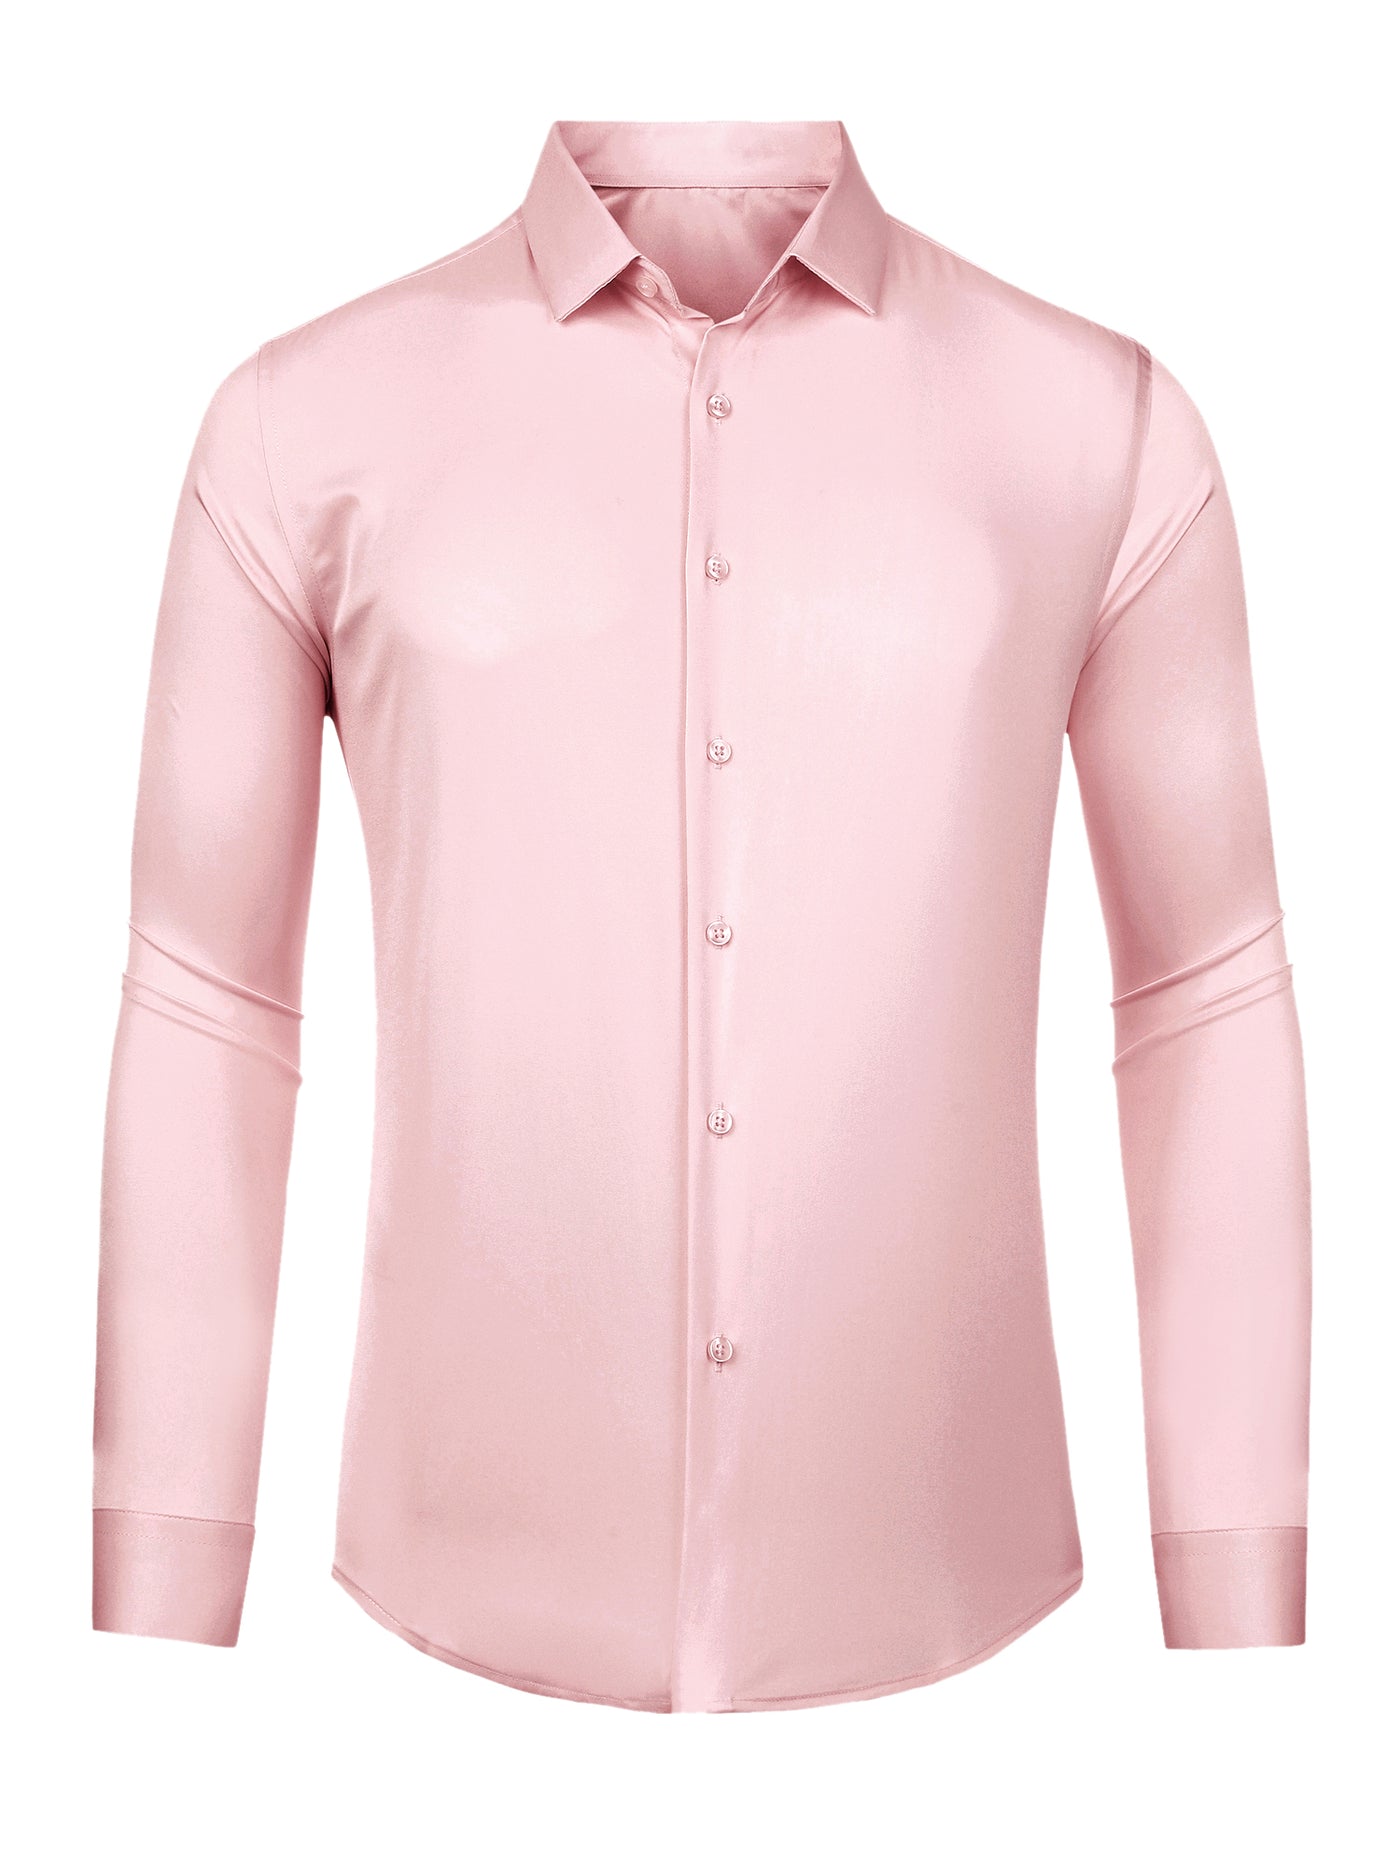 Bublédon Men's Satin Long Sleeves Button Up Business Prom Dress Shirts